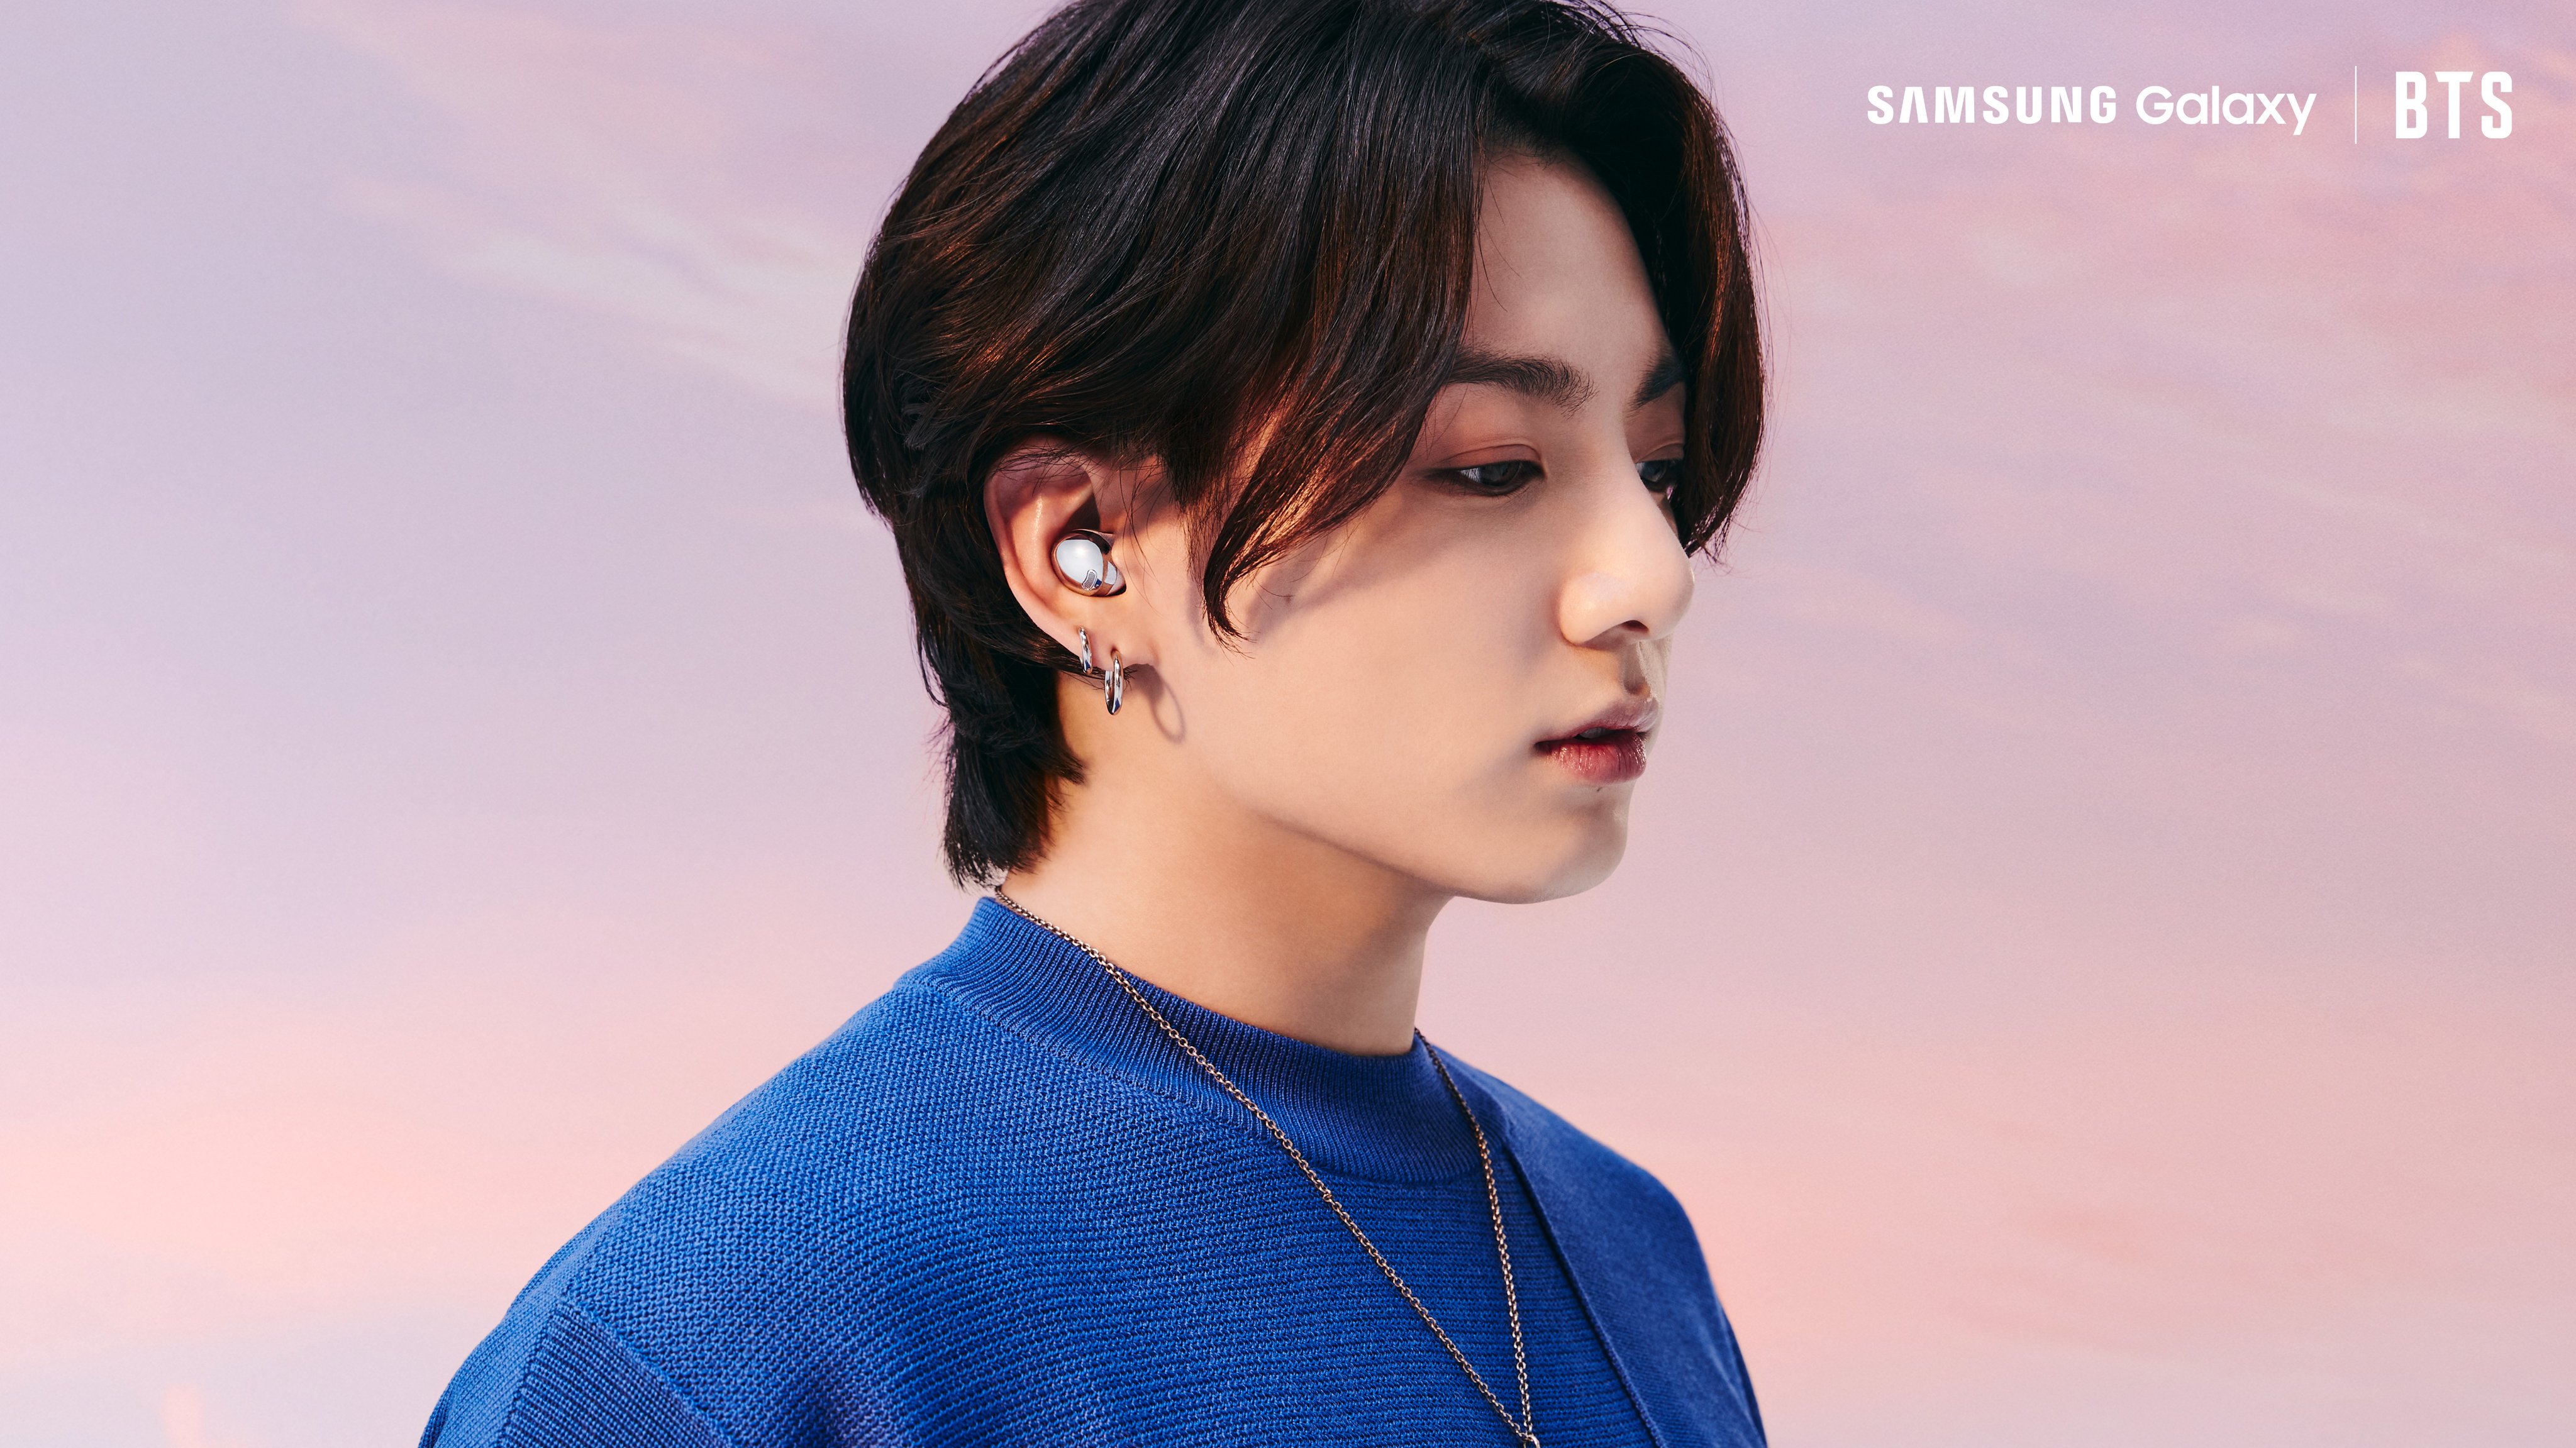  Samsung Galaxy x BTS | JK